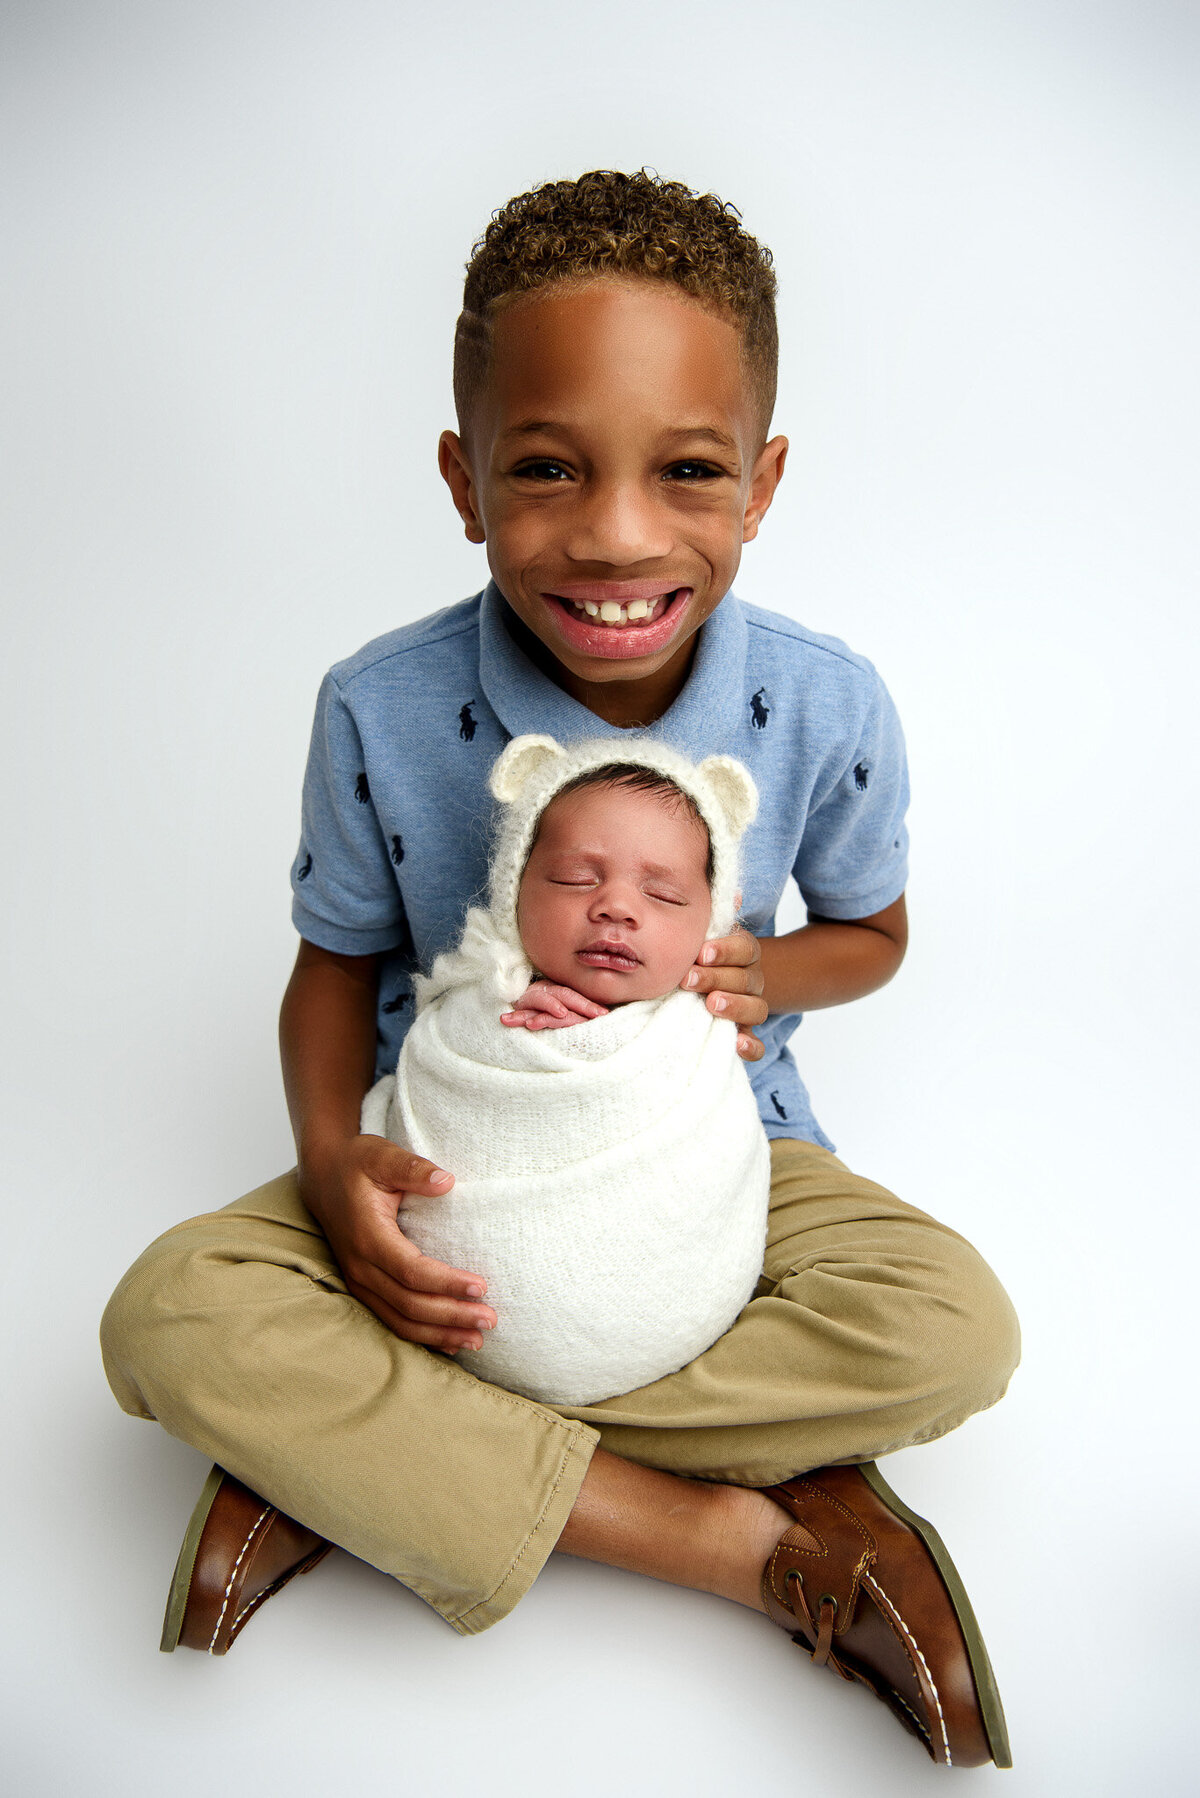 Newborn baby boy with brother